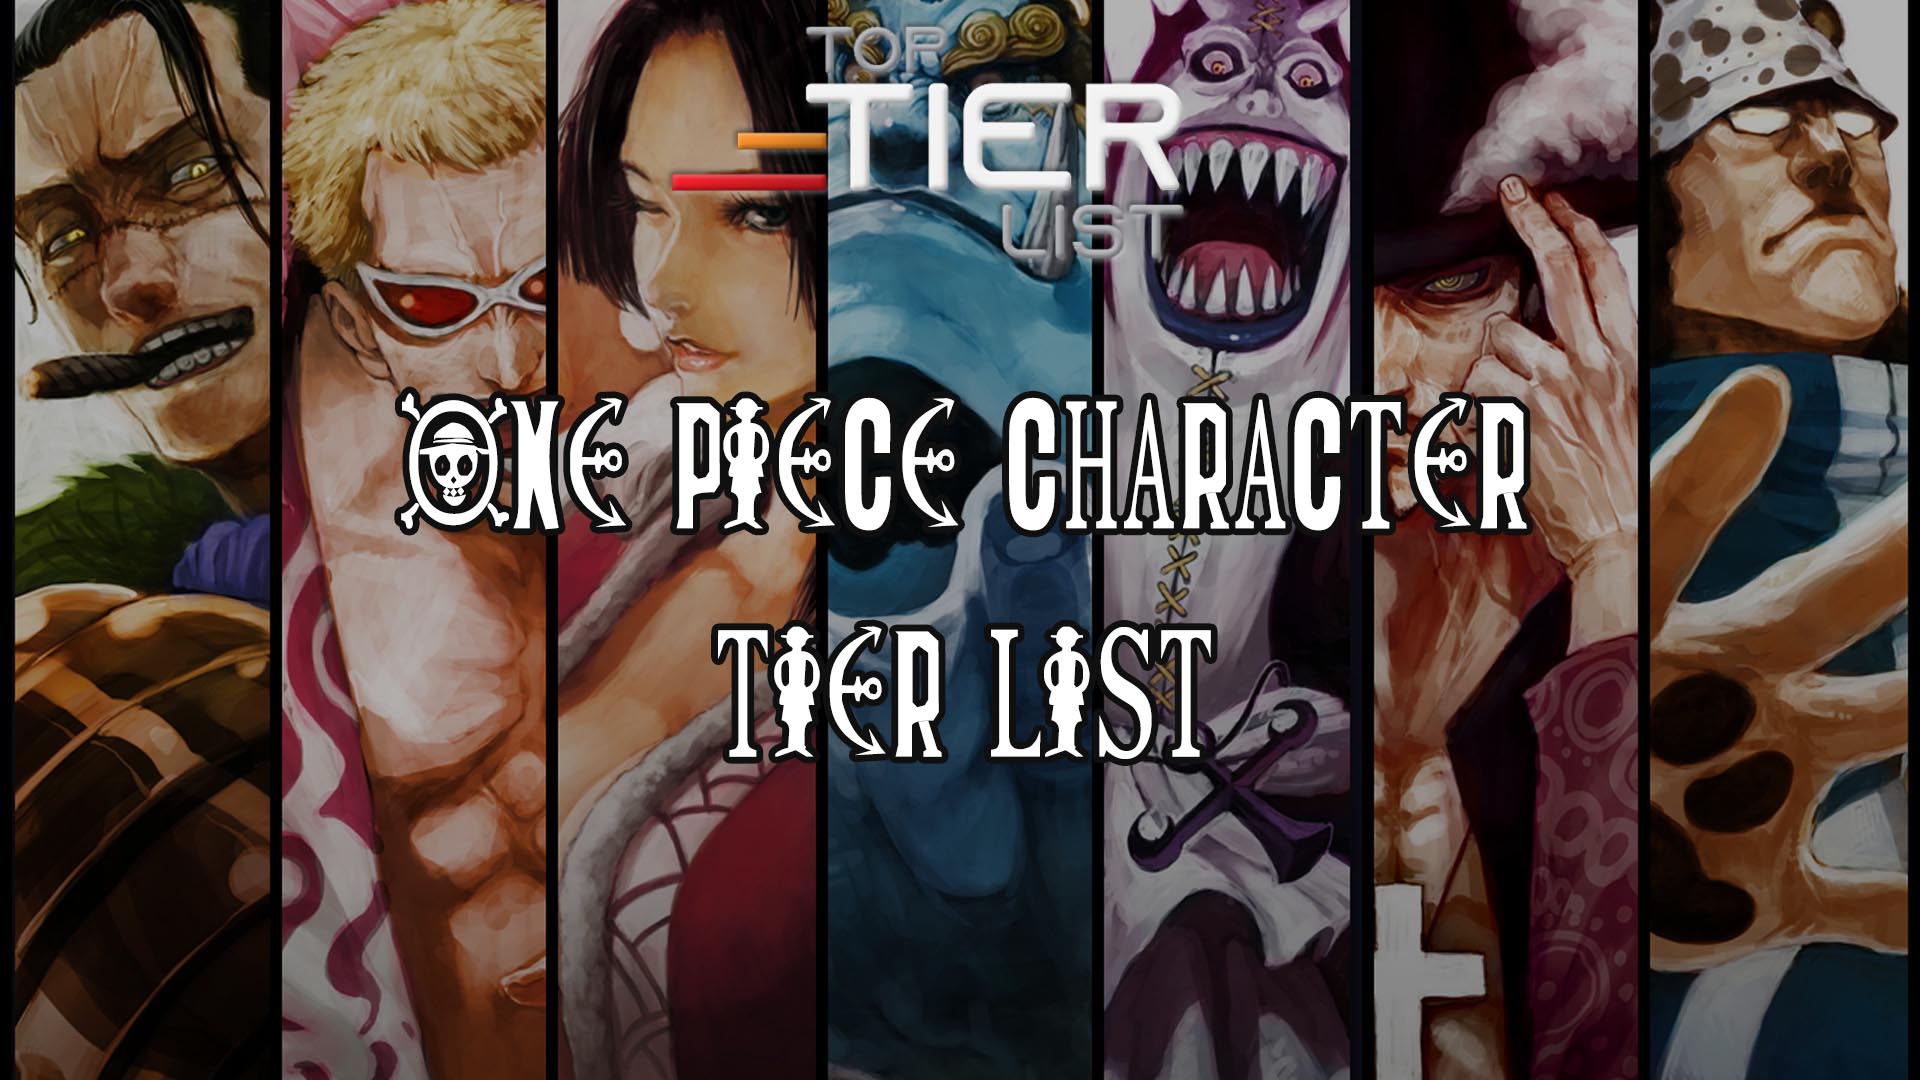 One Piece DF Tier List - Ope Ope No Mi